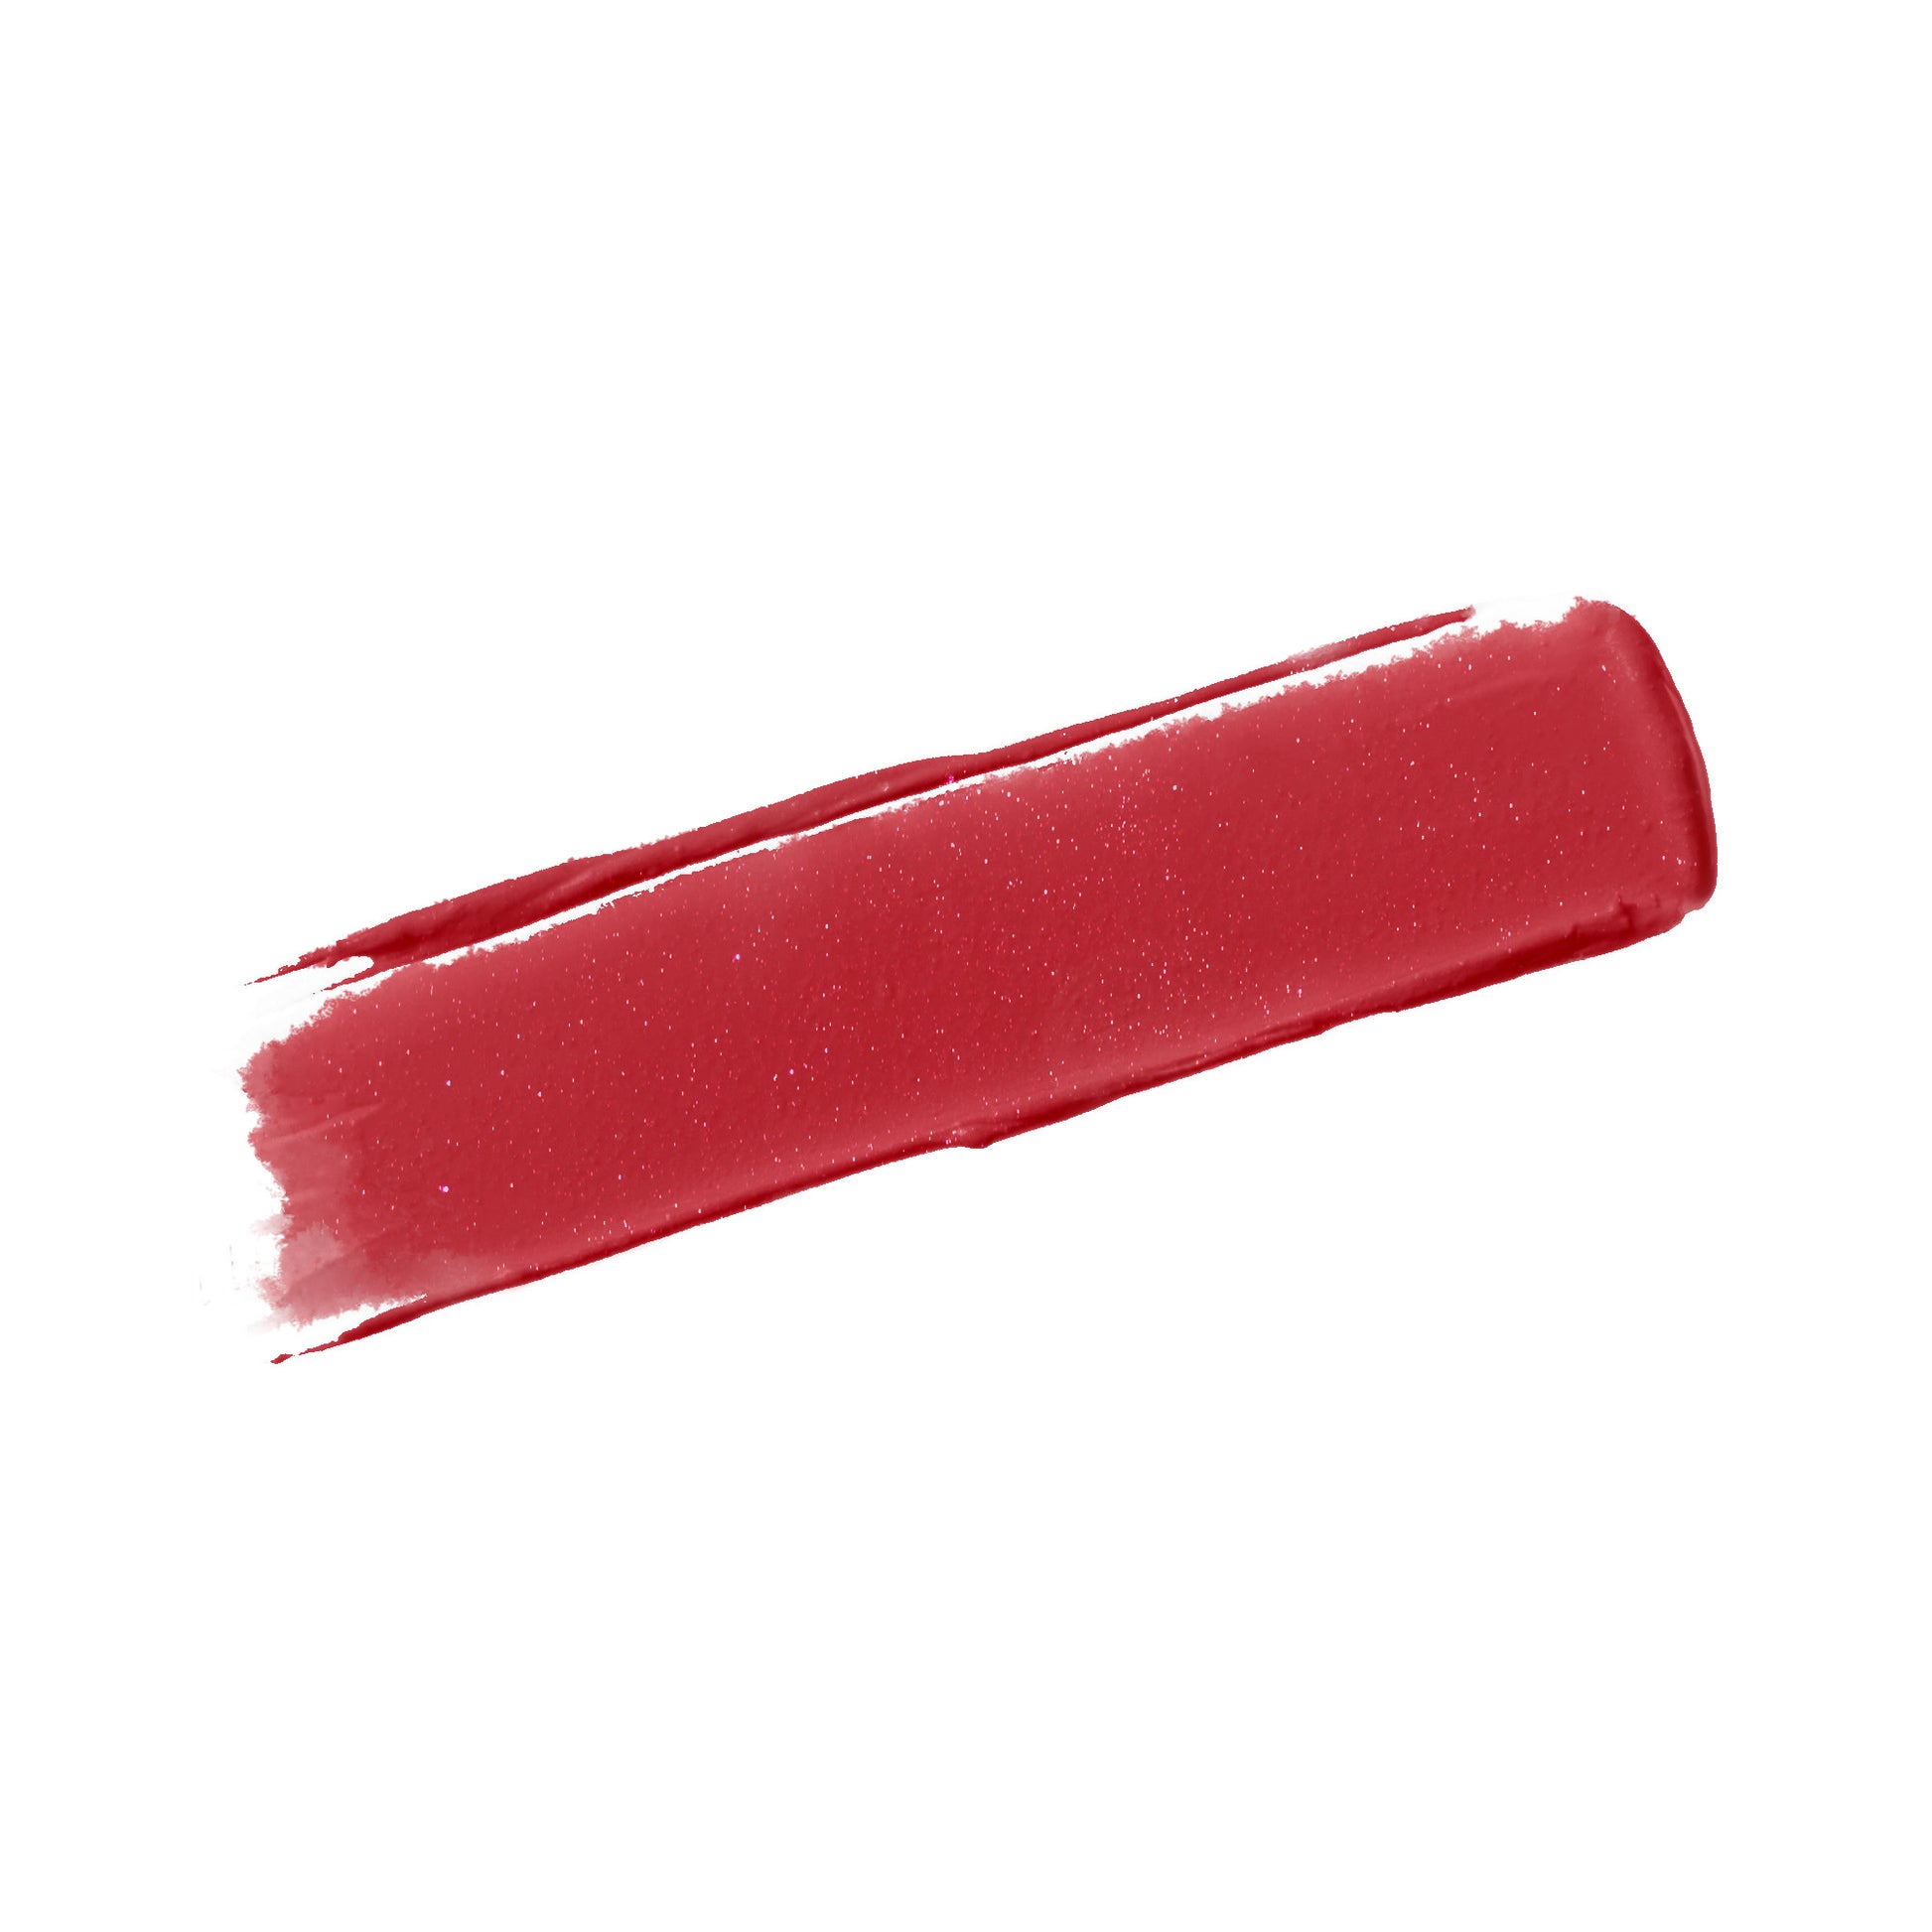 NXTE NXTEssence Amorous Liquid Lip Stick Swatch color